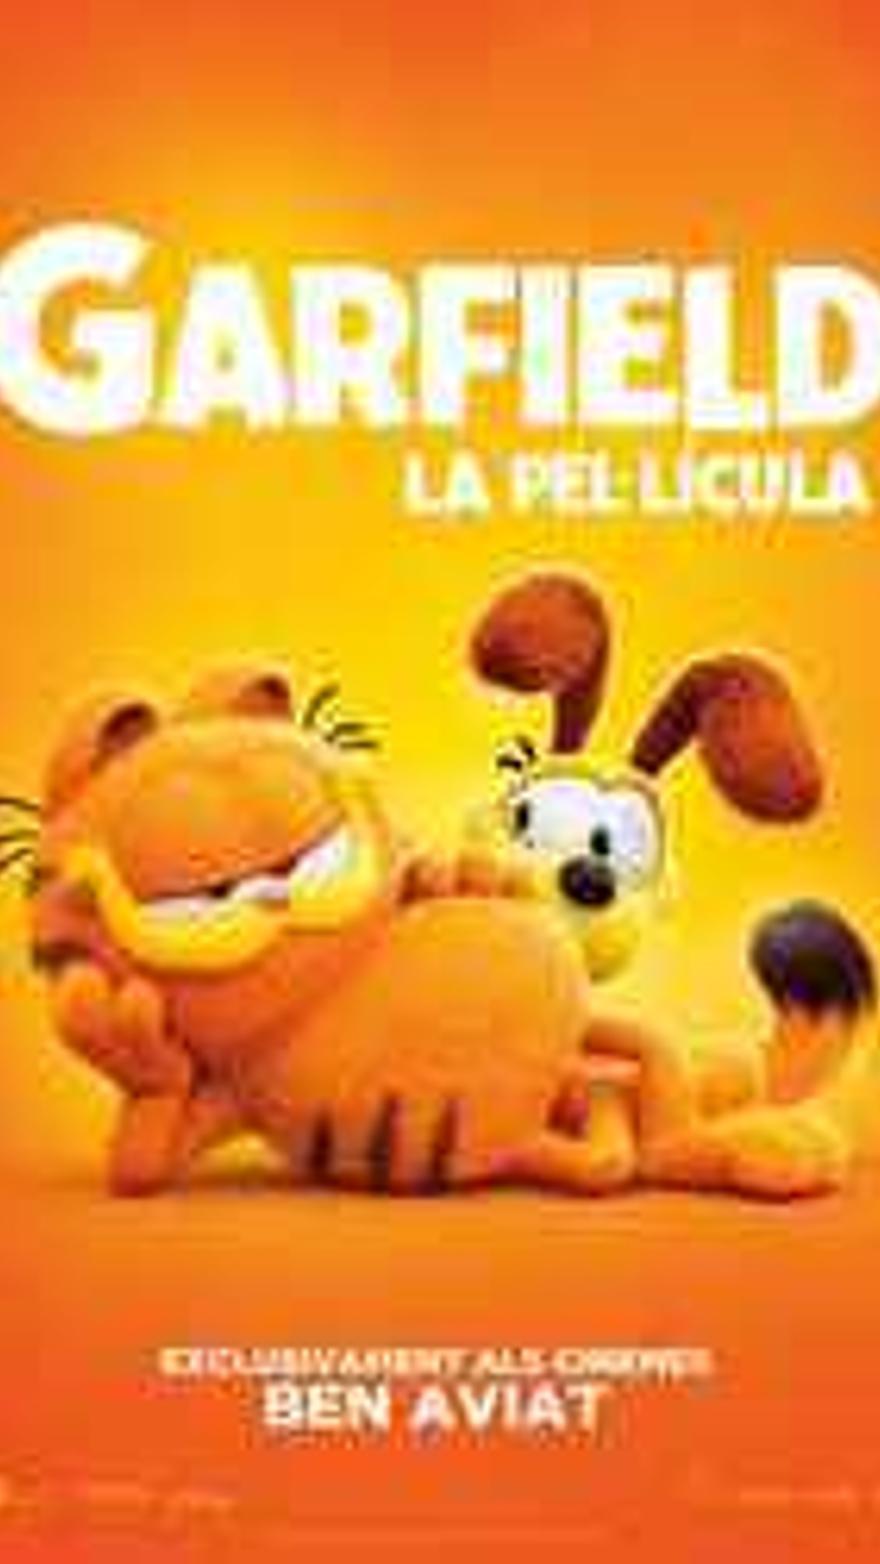 Garfield: la pel·lícula